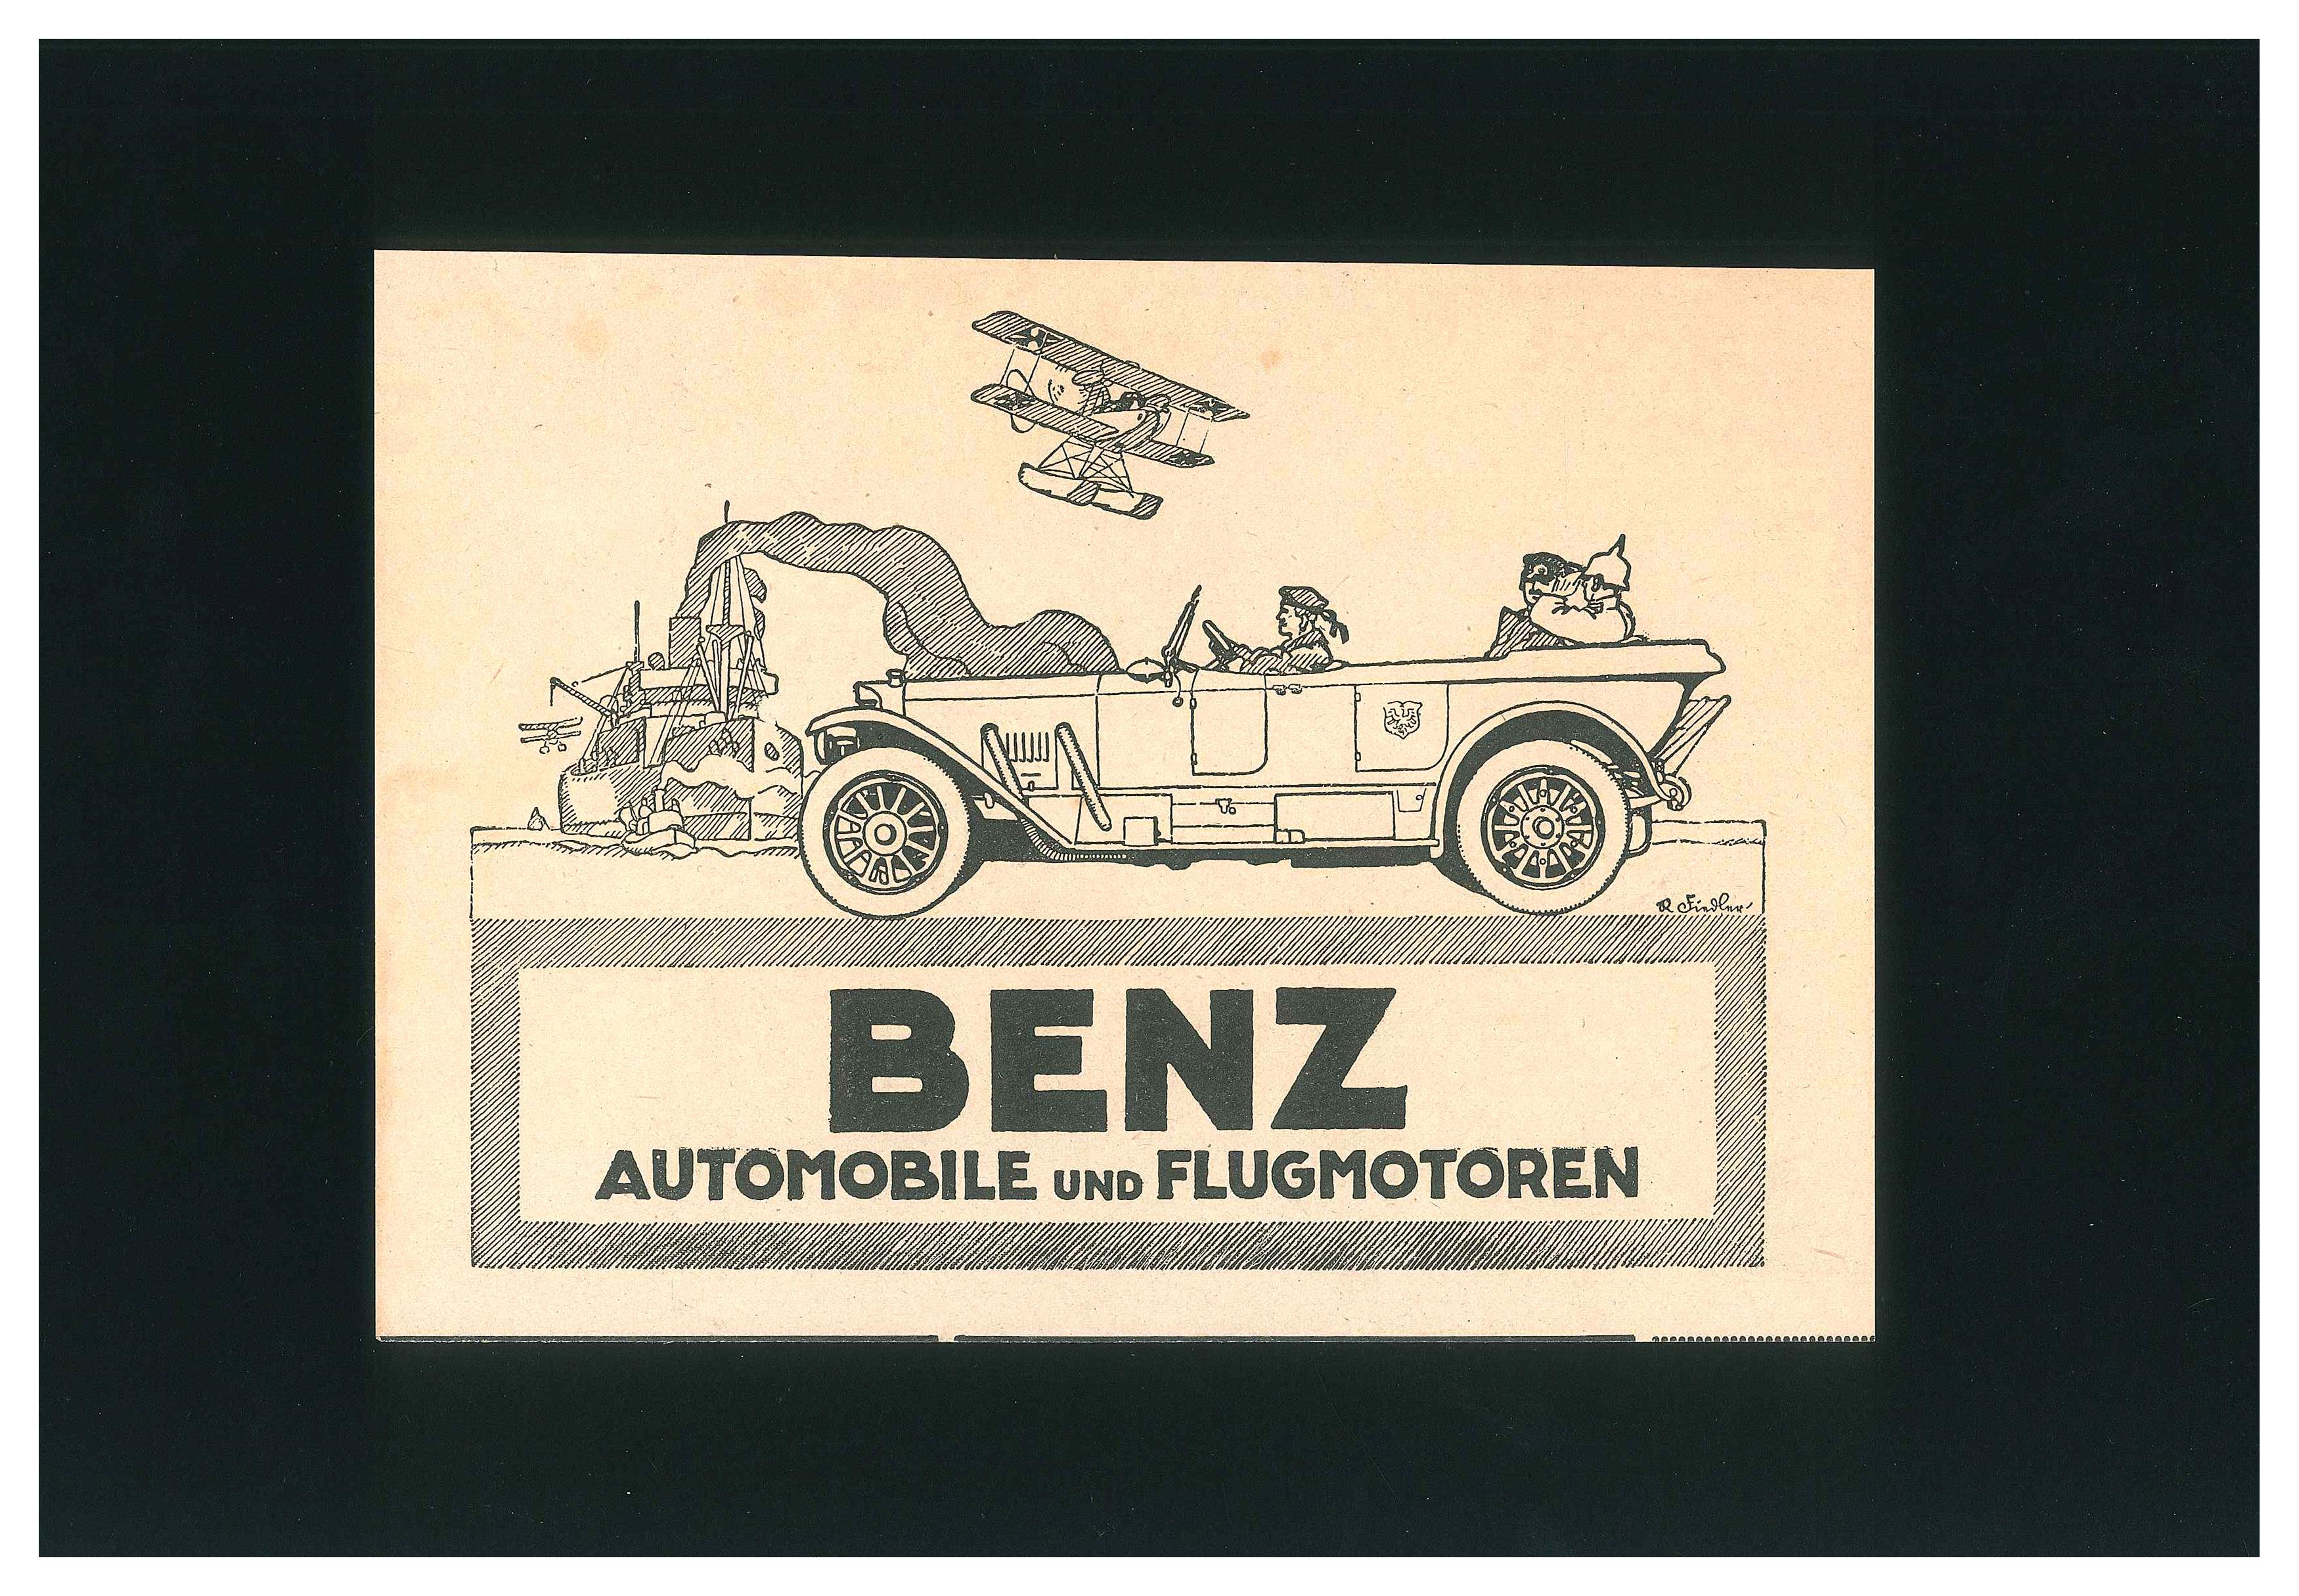 Benz Automobile Advertising - Original Vintage Advertising on Paper - 1910/20